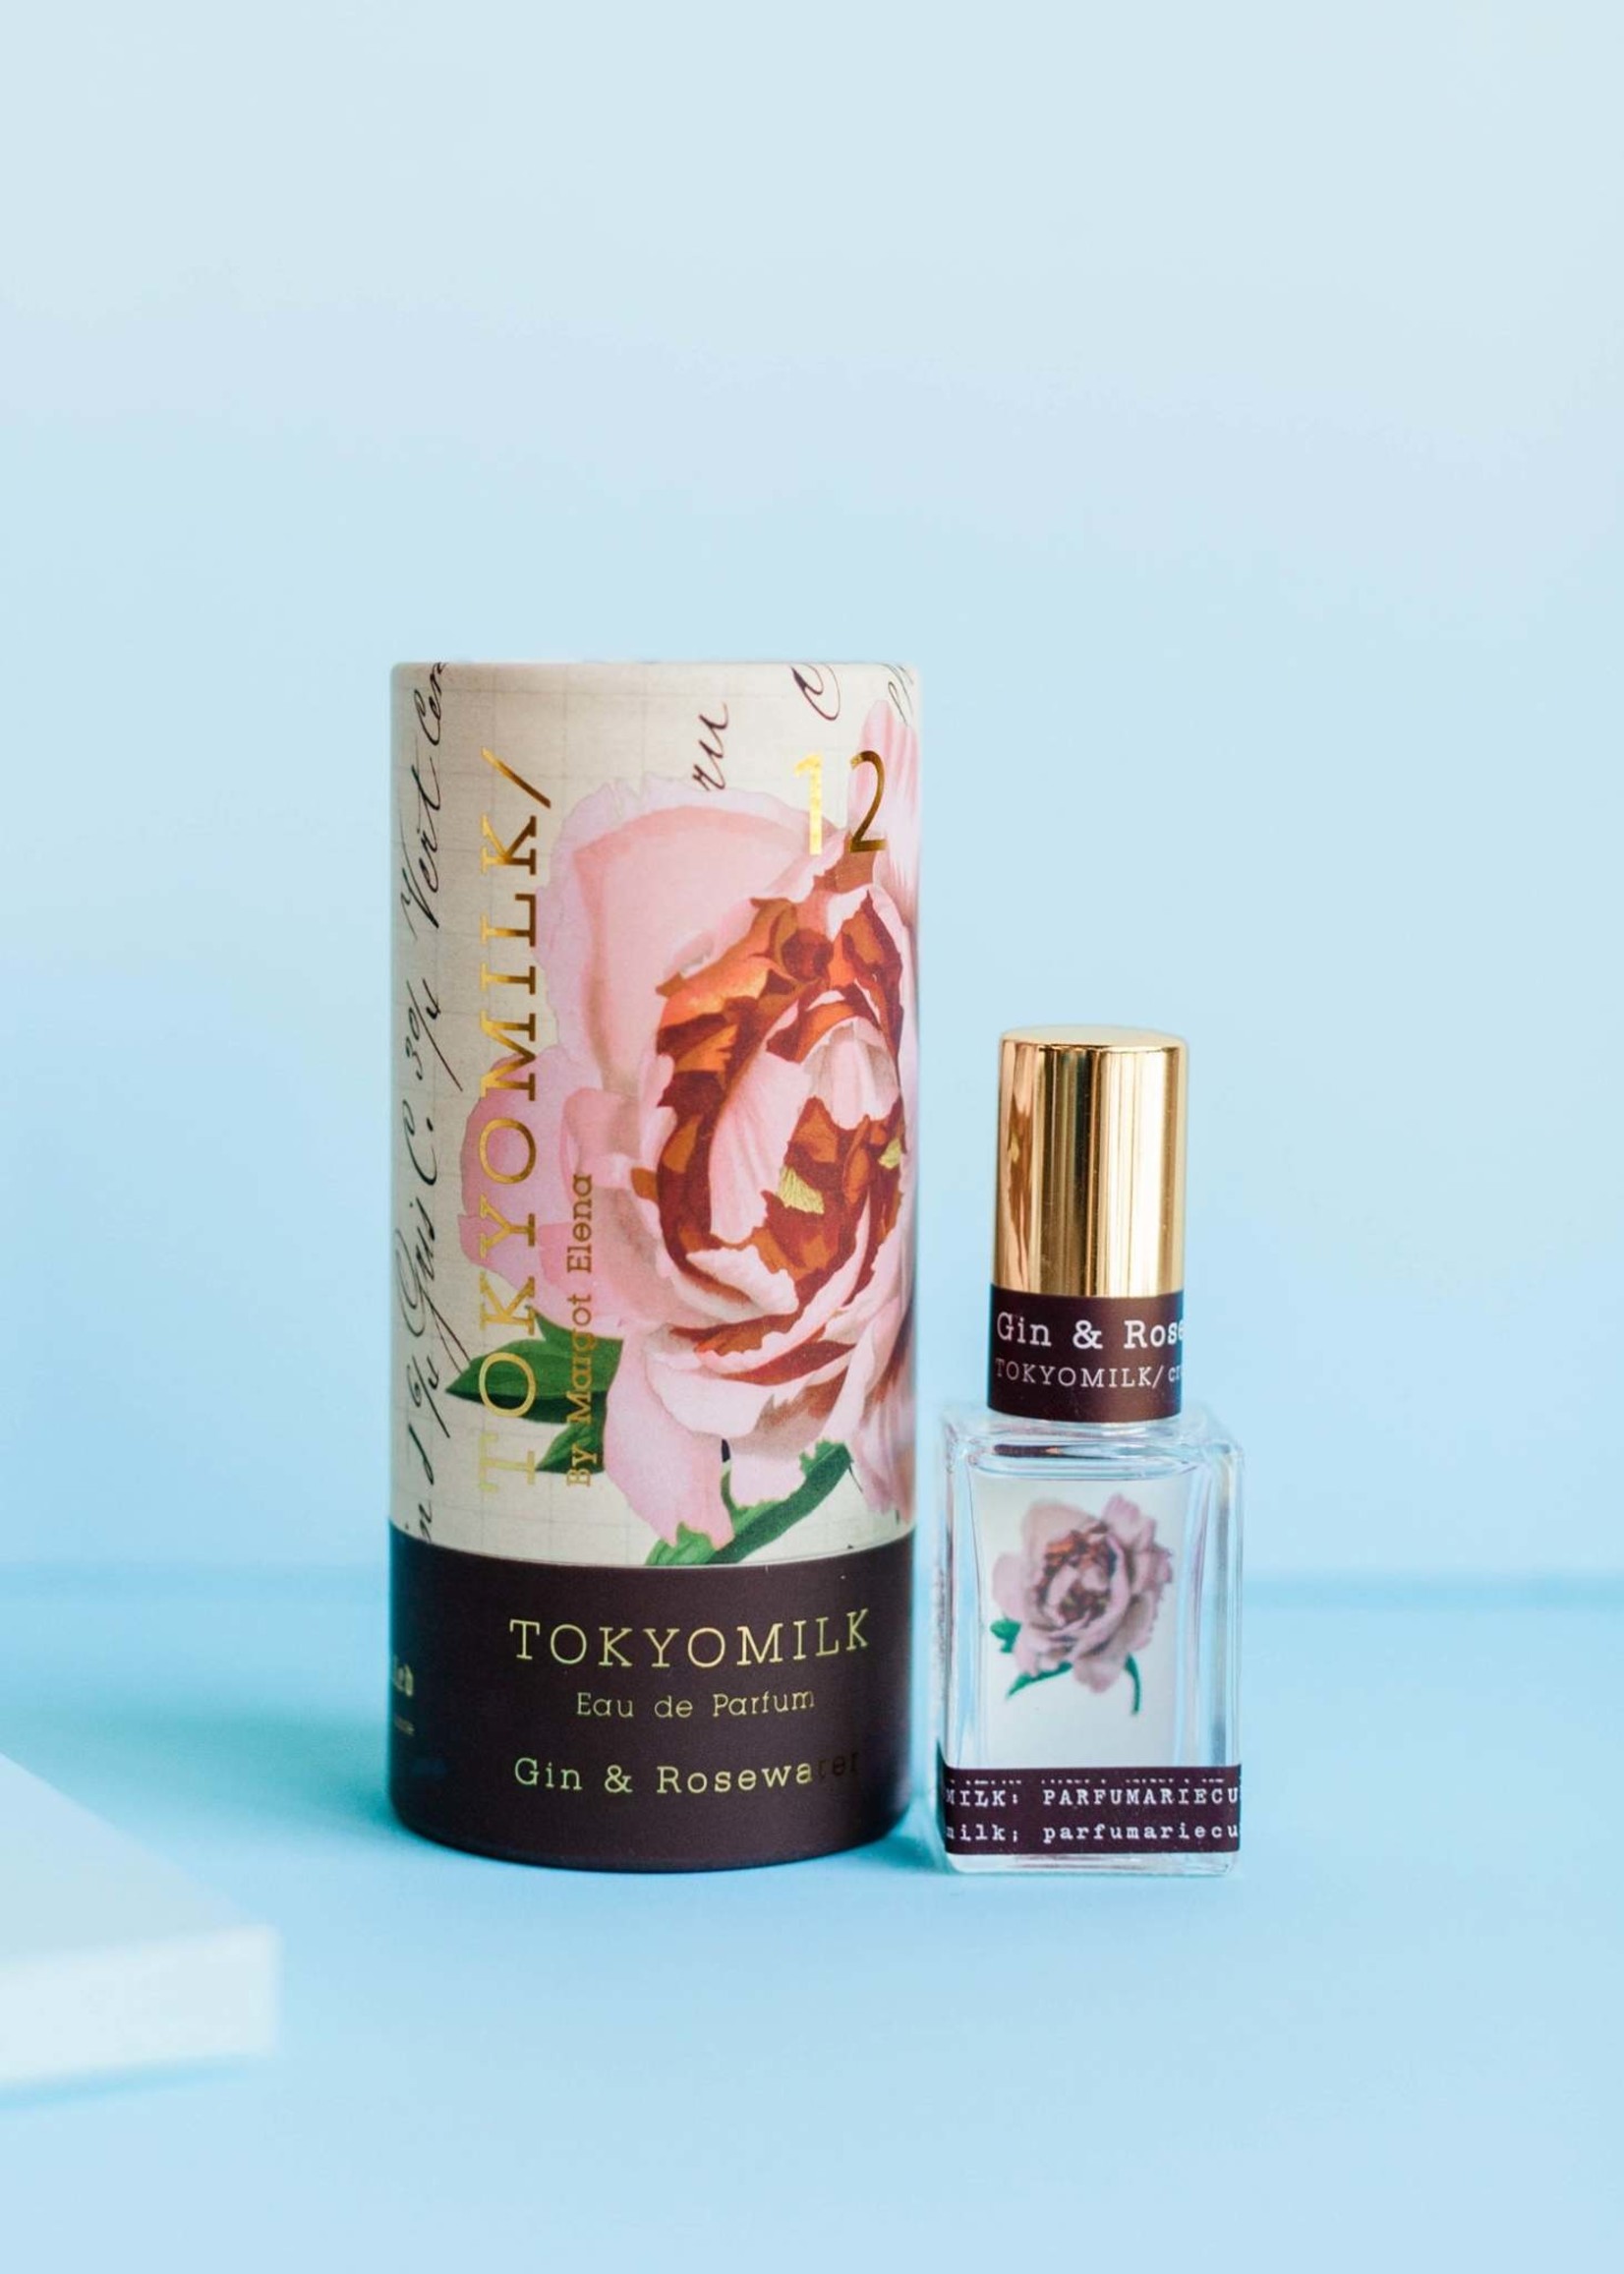 Tokyo Milk Tokyo Milk Perfume (Gin & Rosewater)